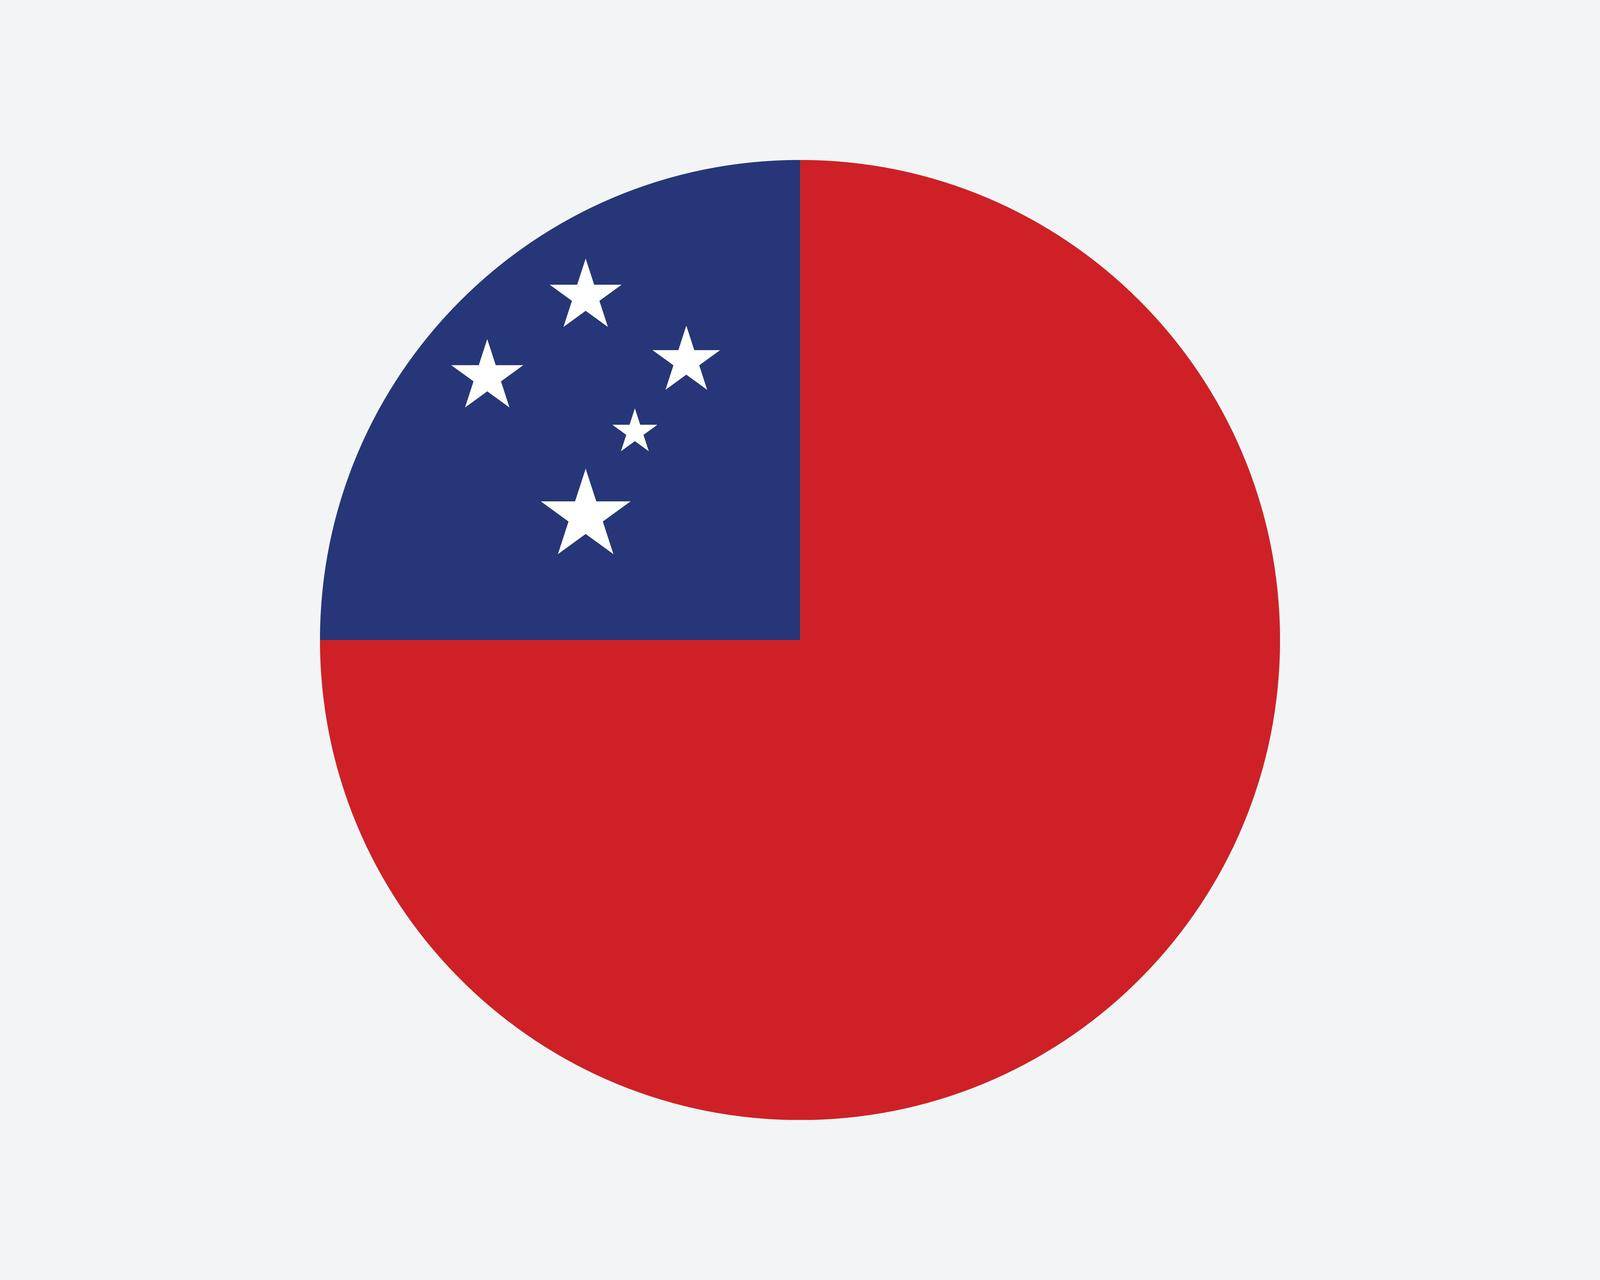 Samoa Round Country Flag. Samoan Circle National Flag. Independent State of Samoa Circular Shape Button Banner. EPS Vector Illustration.